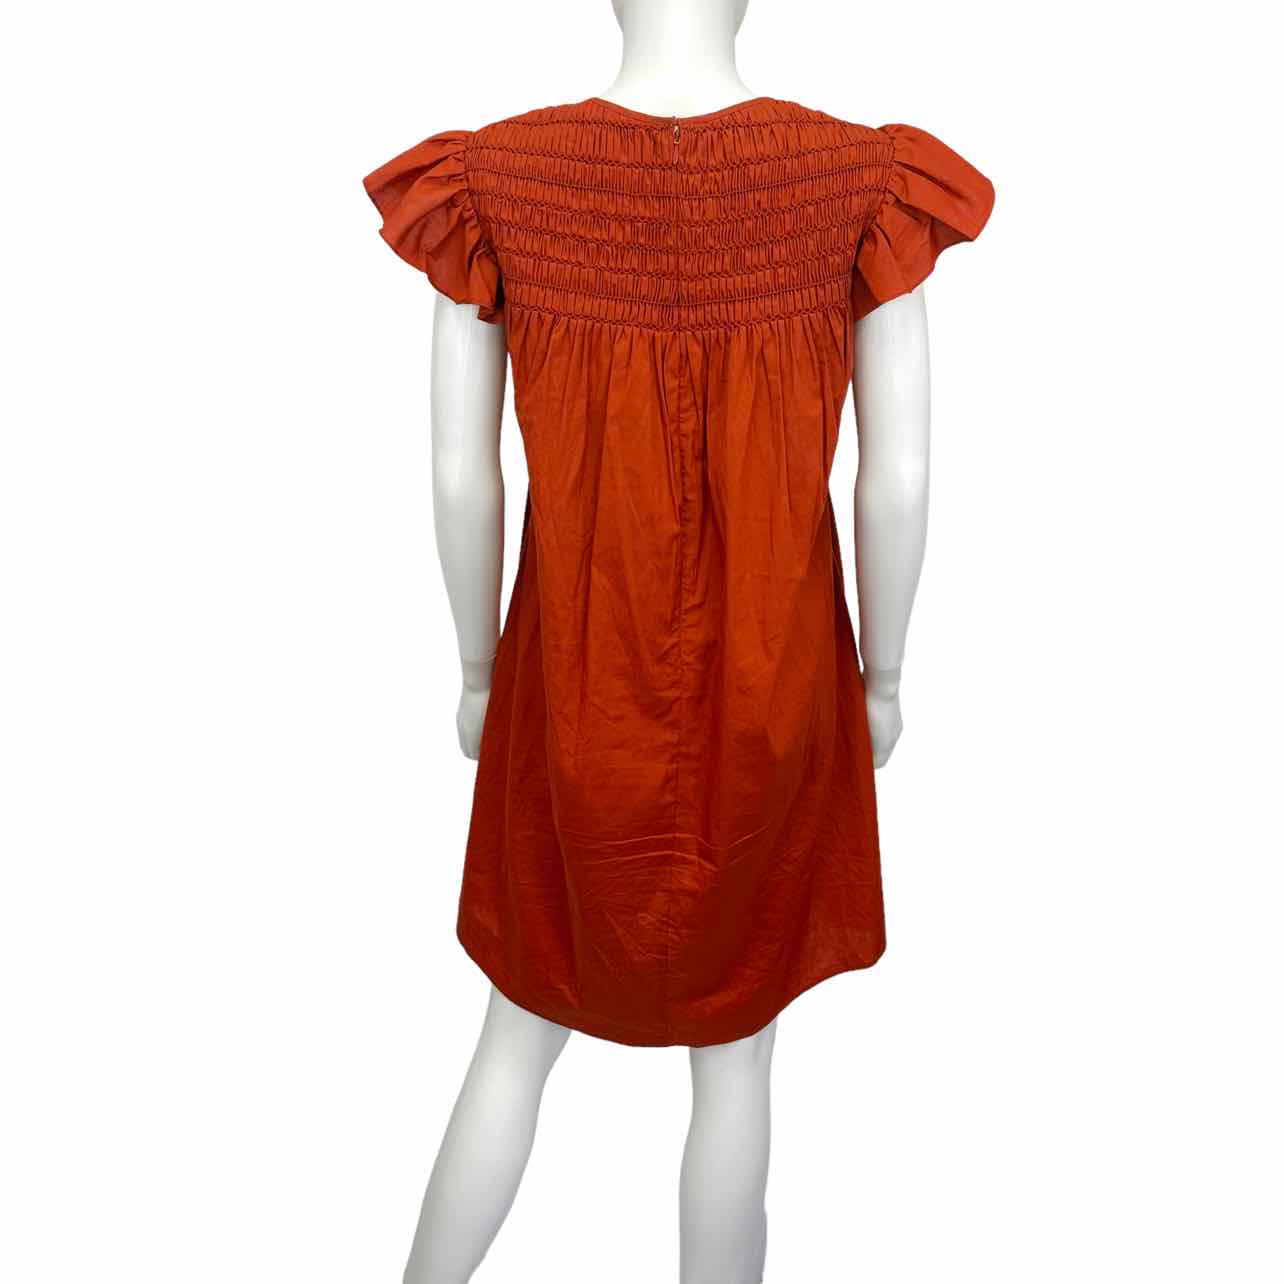 Buy Burnt Orange Infinity Dress, Multiway Dress - InfinityDress.com